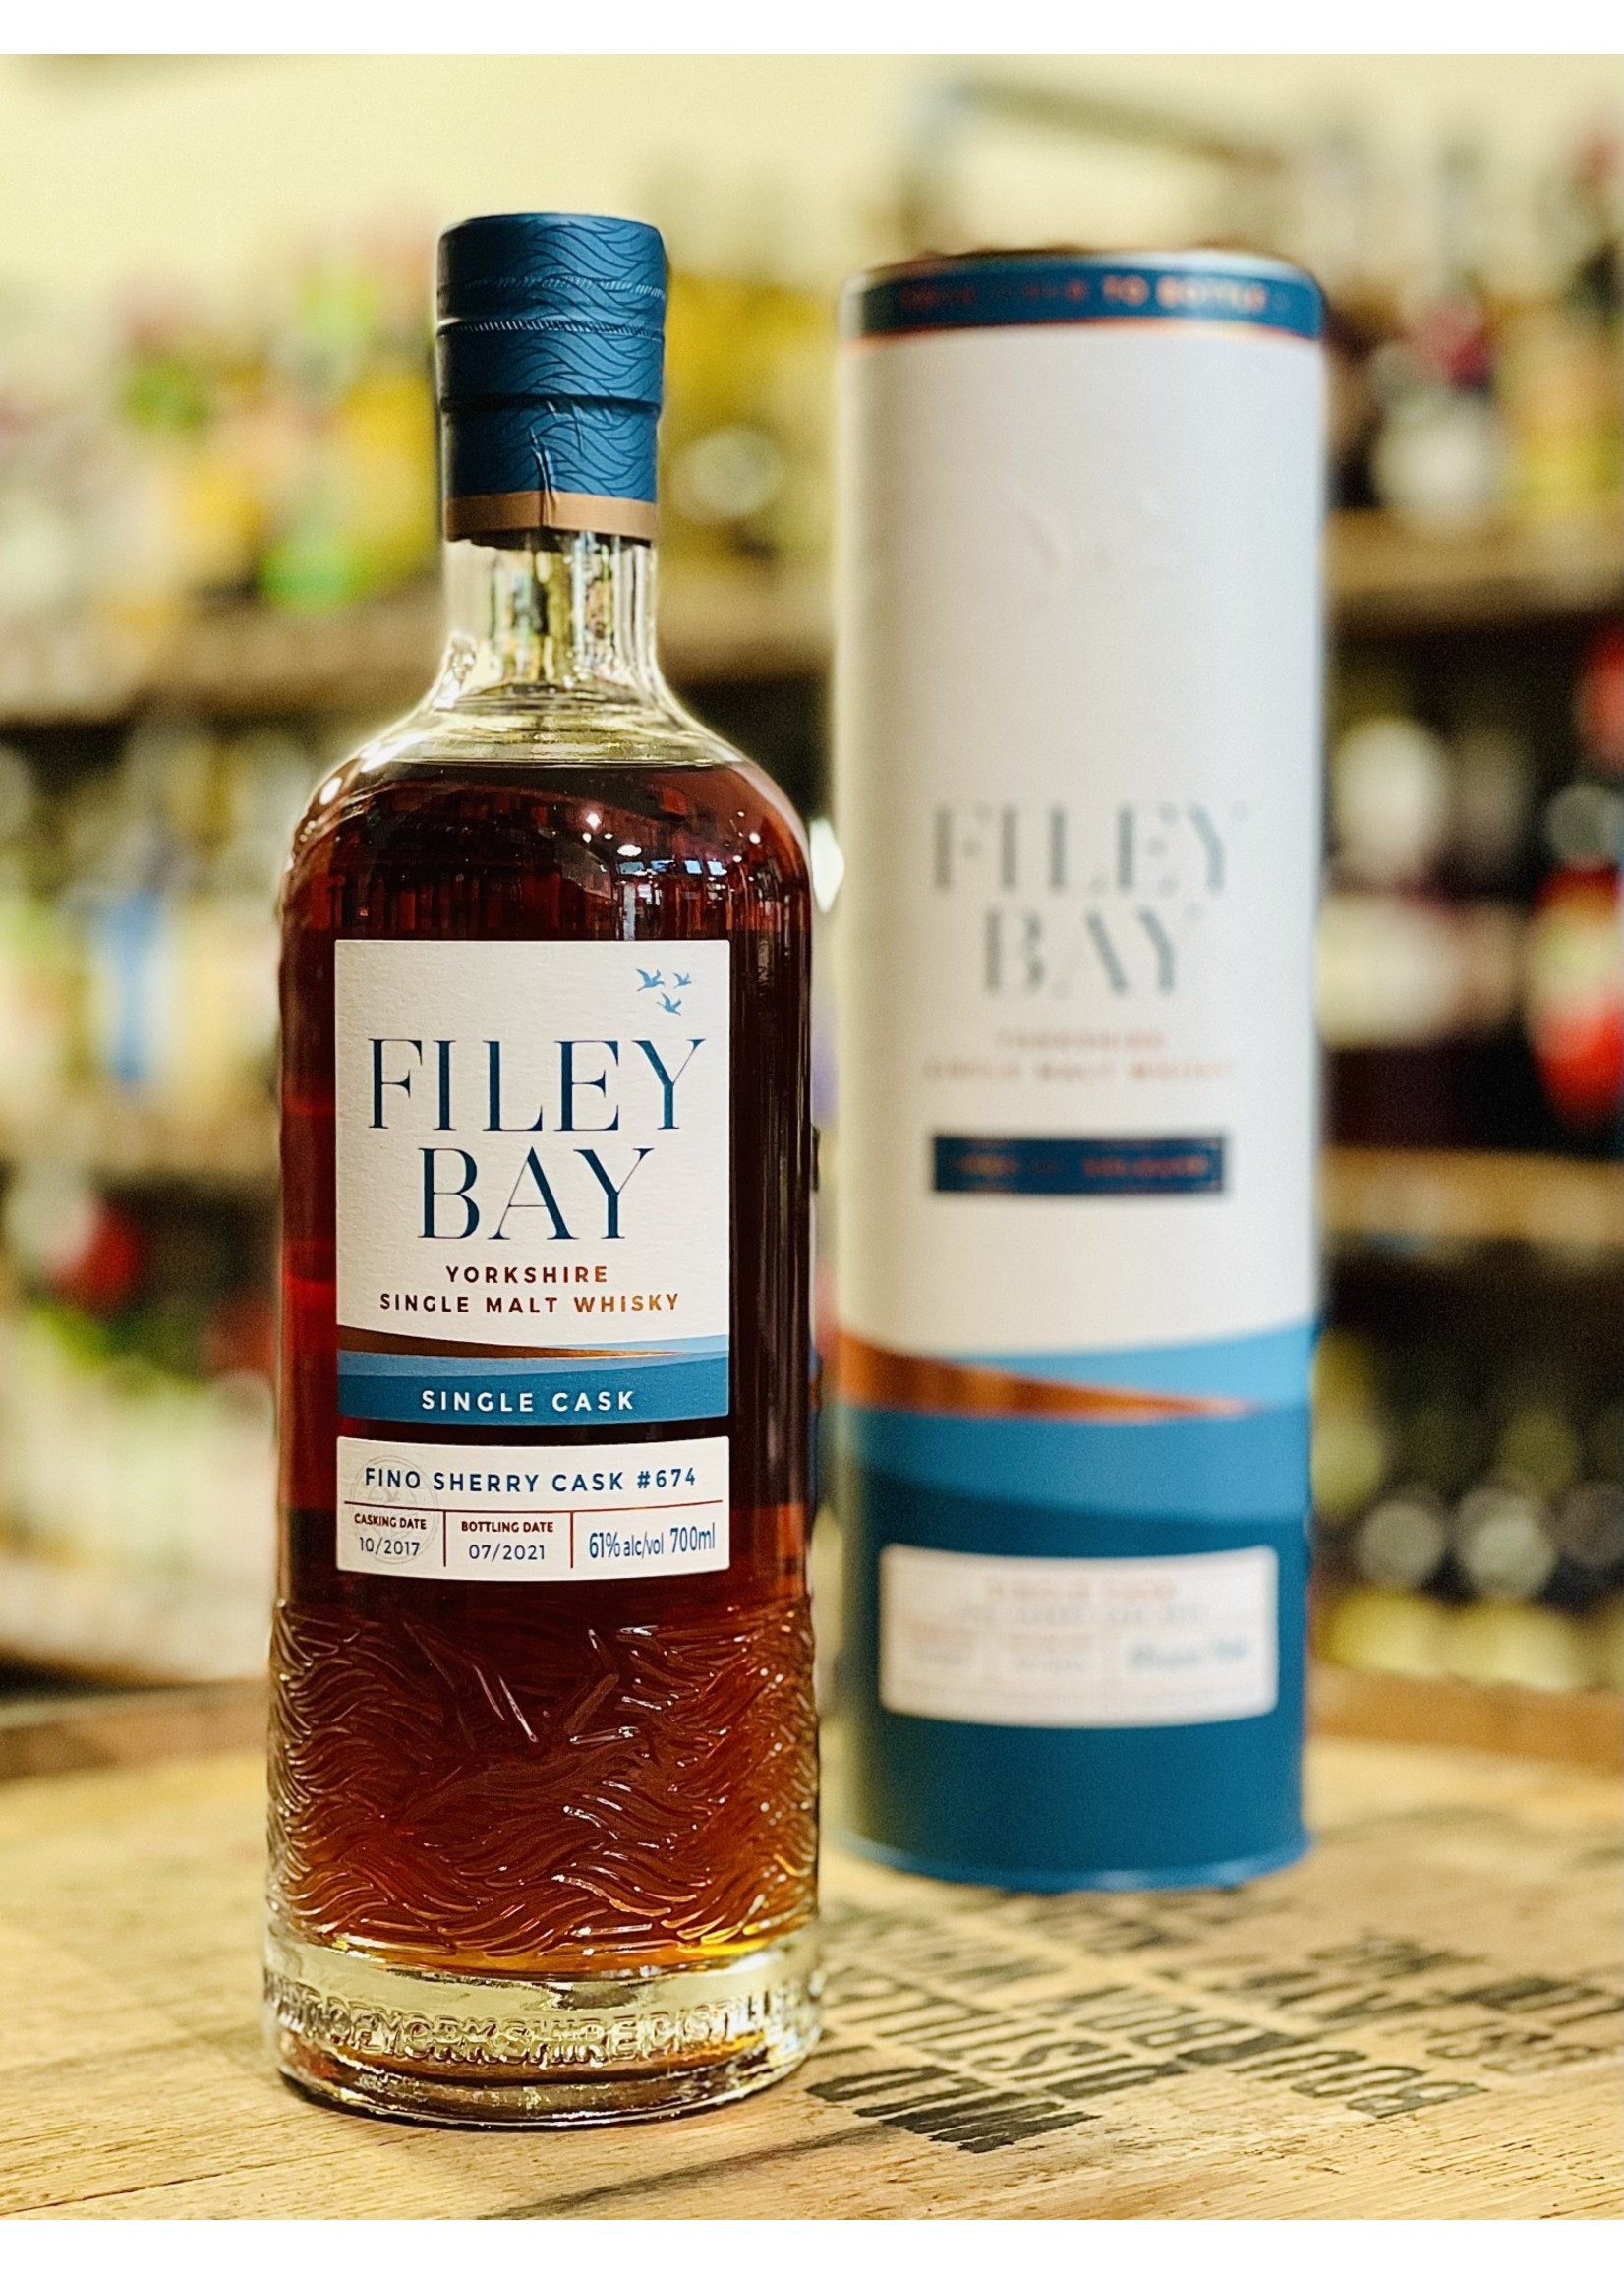 Filey Bay Filey Bay / Spirit of Yorkshire Fino Single Cask Single Malt Whisky 61% abv / 700mL